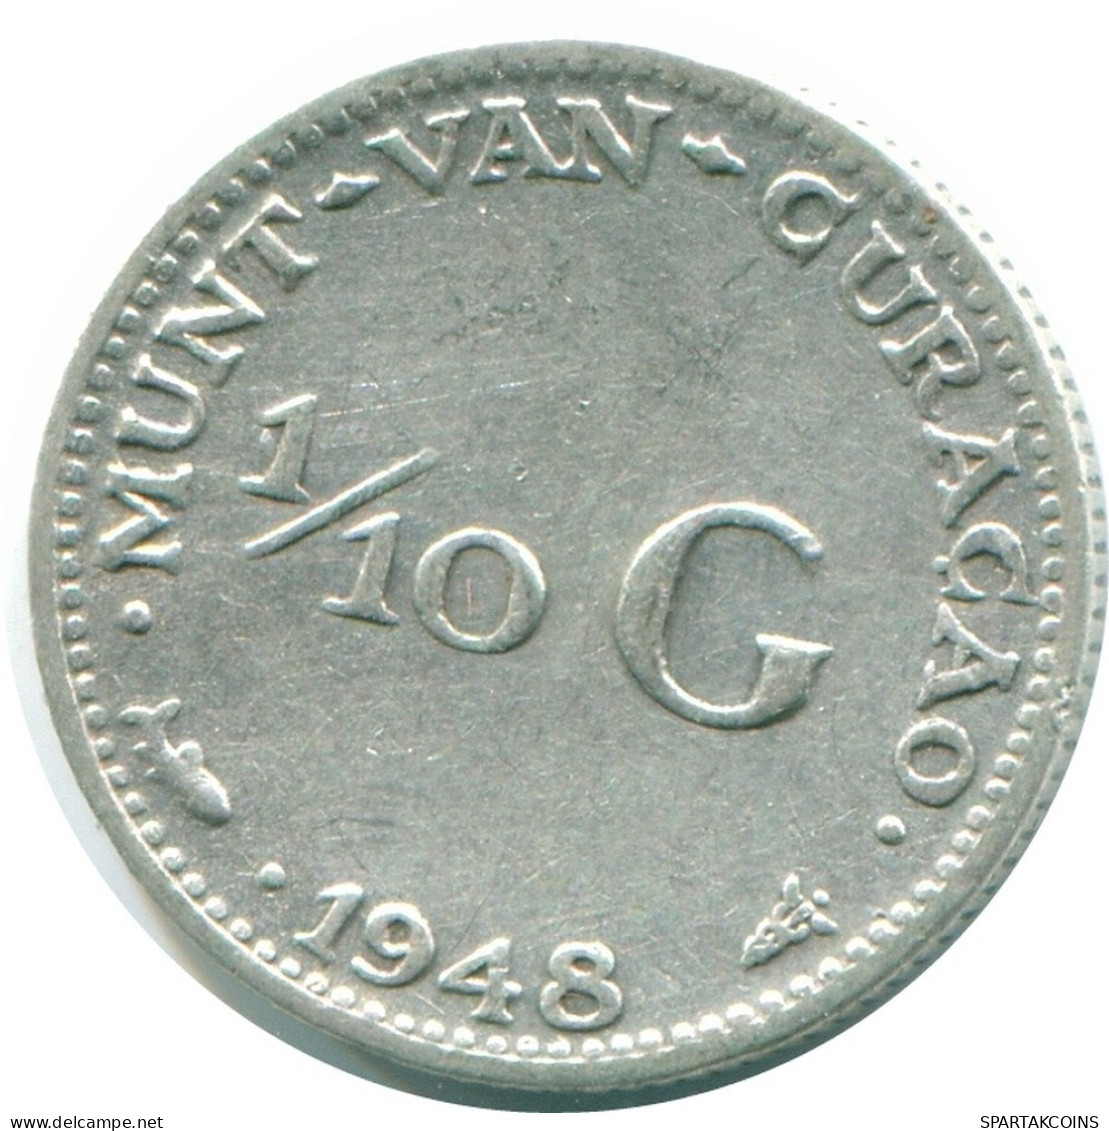 1/10 GULDEN 1948 CURACAO Netherlands SILVER Colonial Coin #NL11896.3.U.A - Curaçao